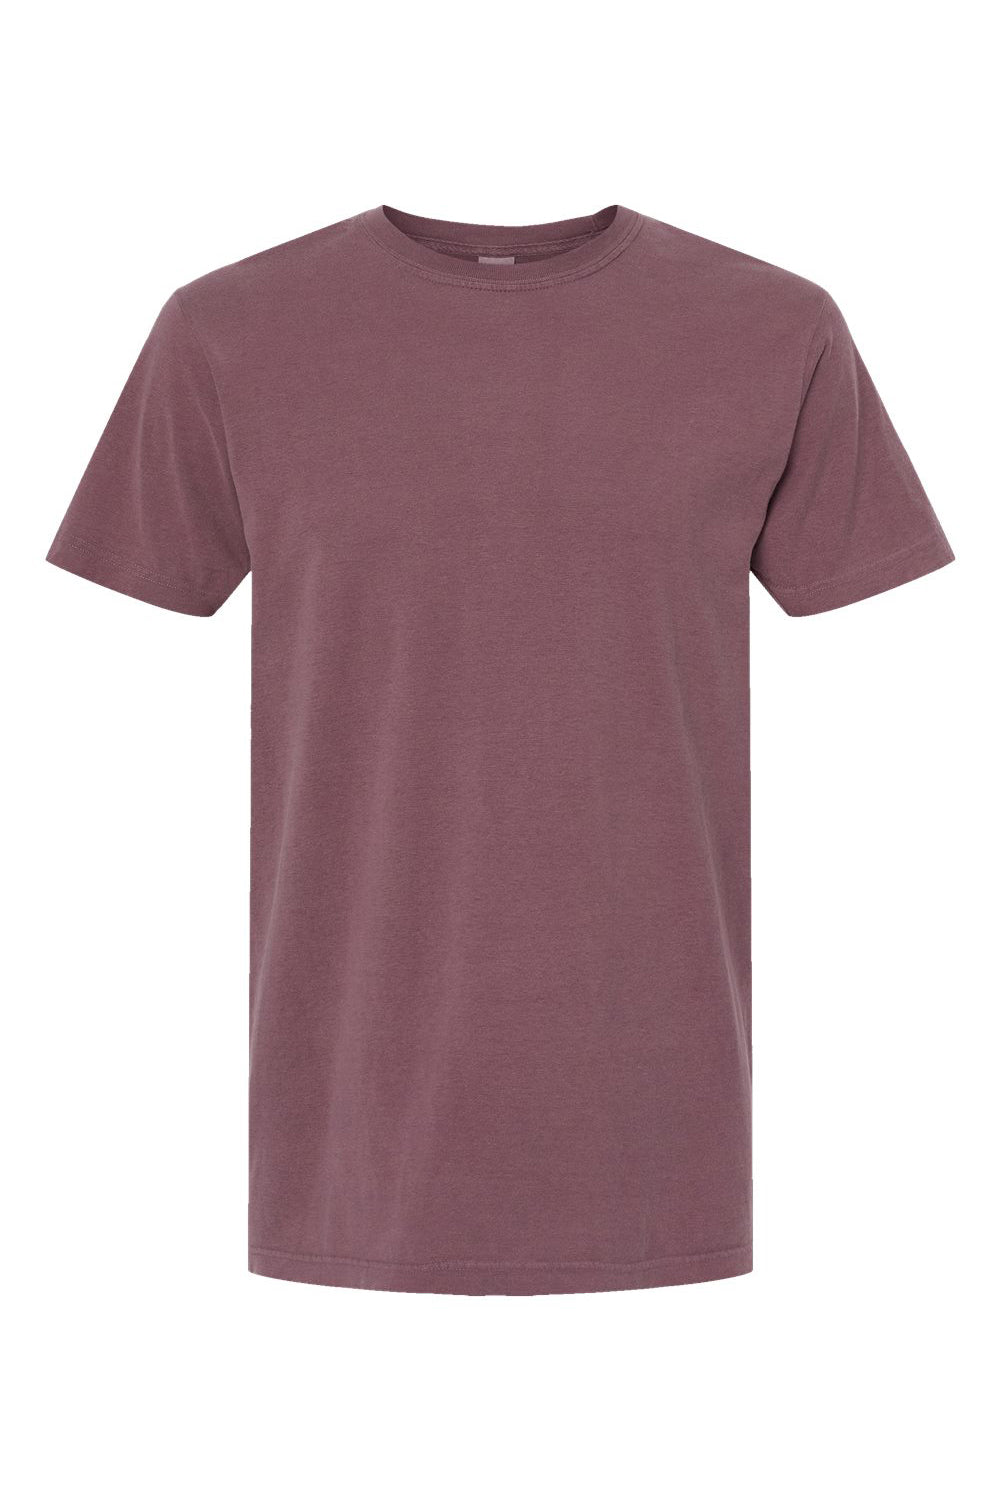 M&O 6500M Mens Vintage Garment Dyed Short Sleeve Crewneck T-Shirt Vineyard Red Flat Front